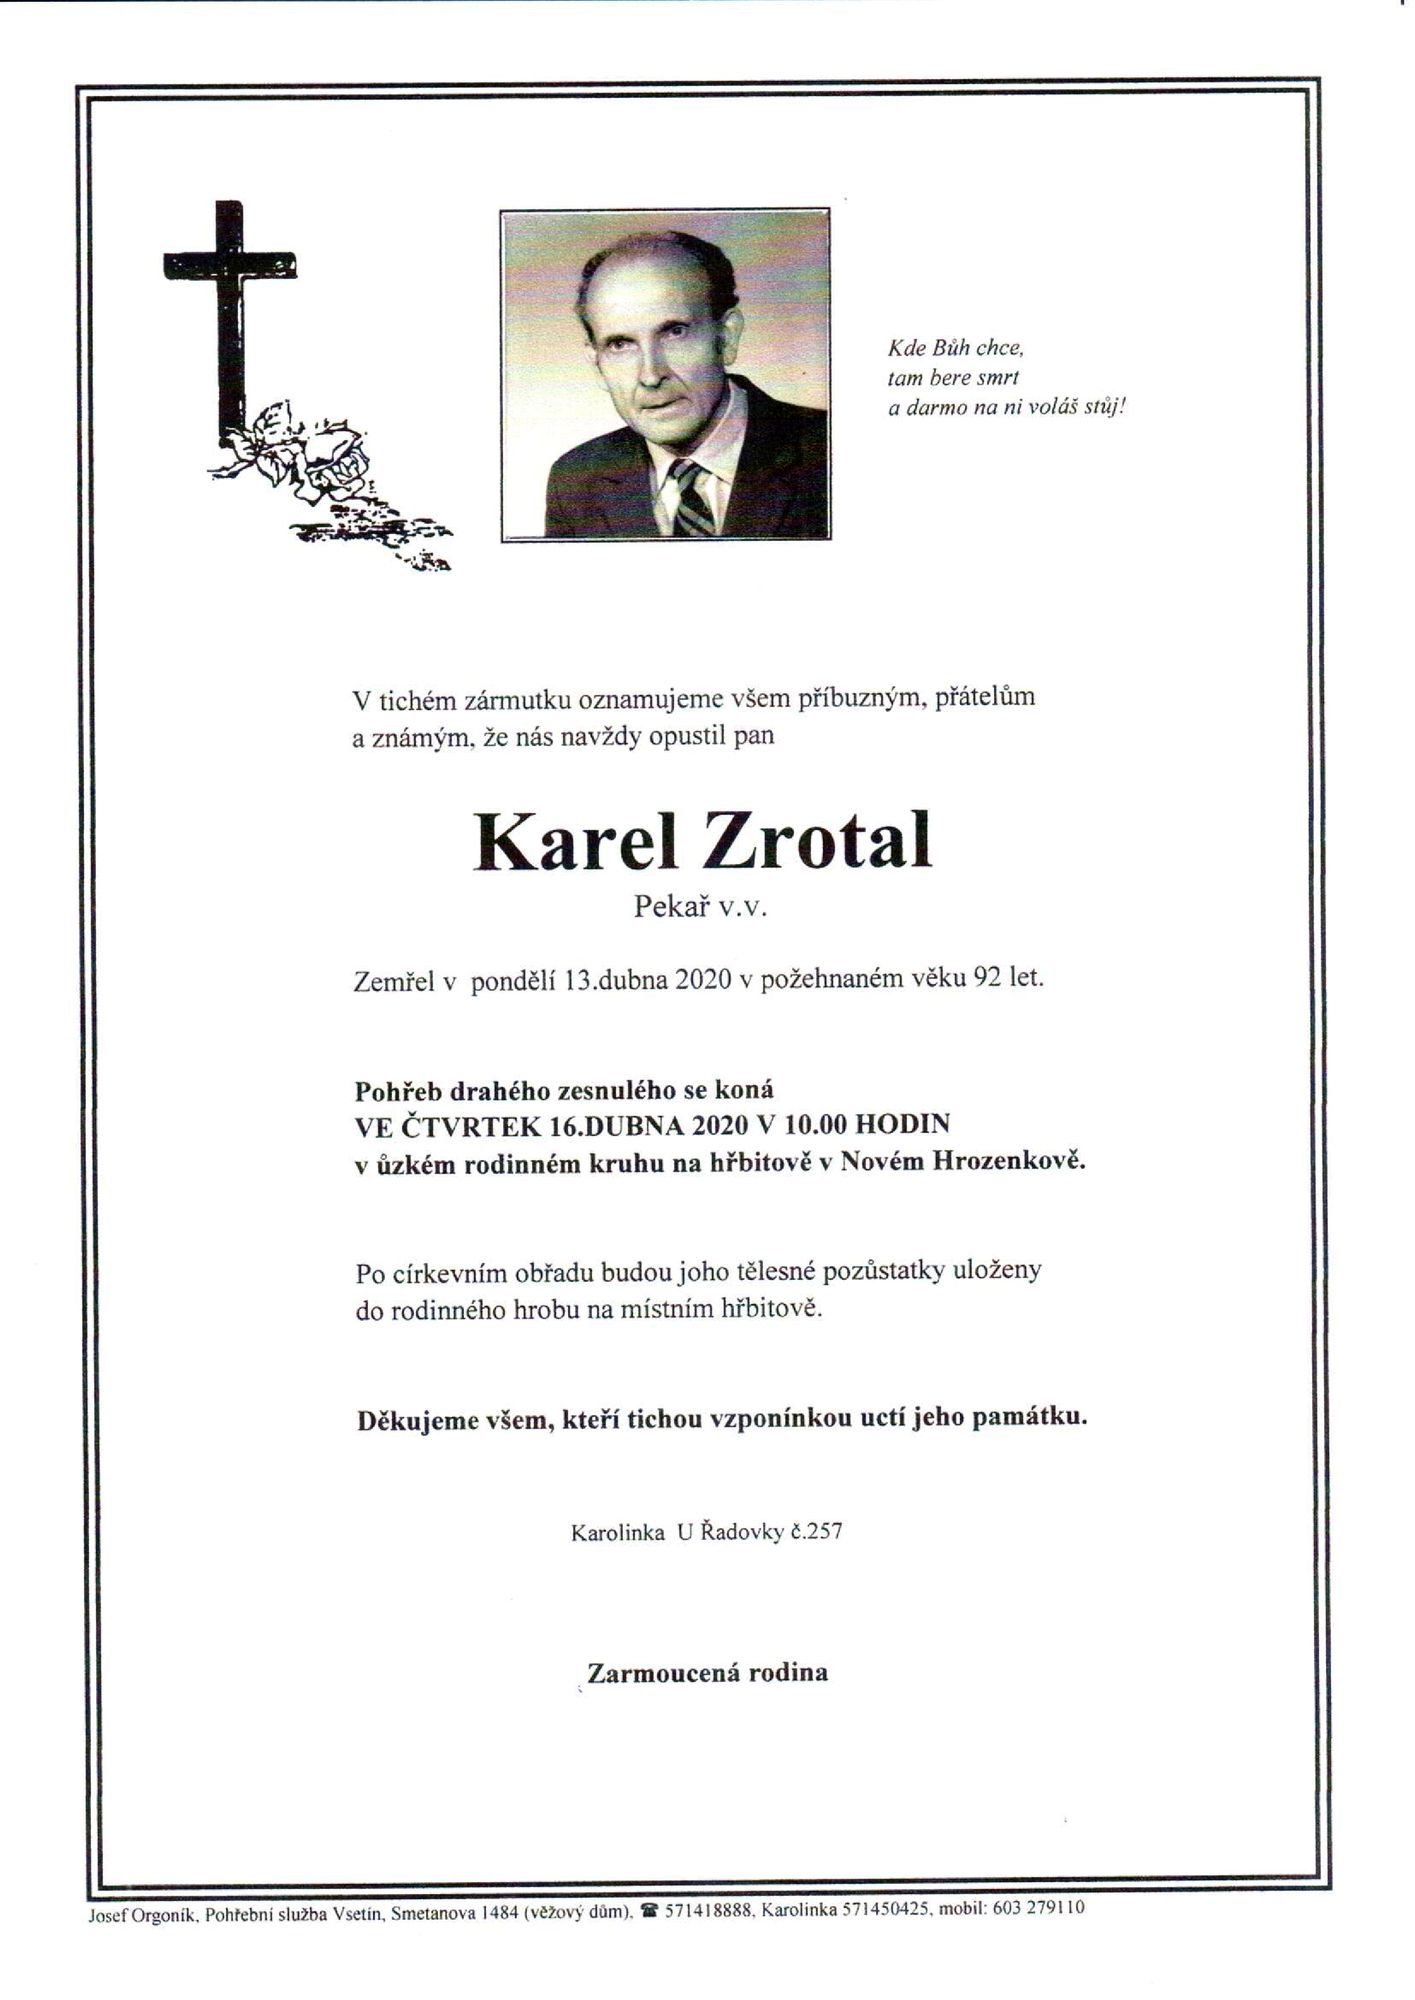 Karel Zrotal